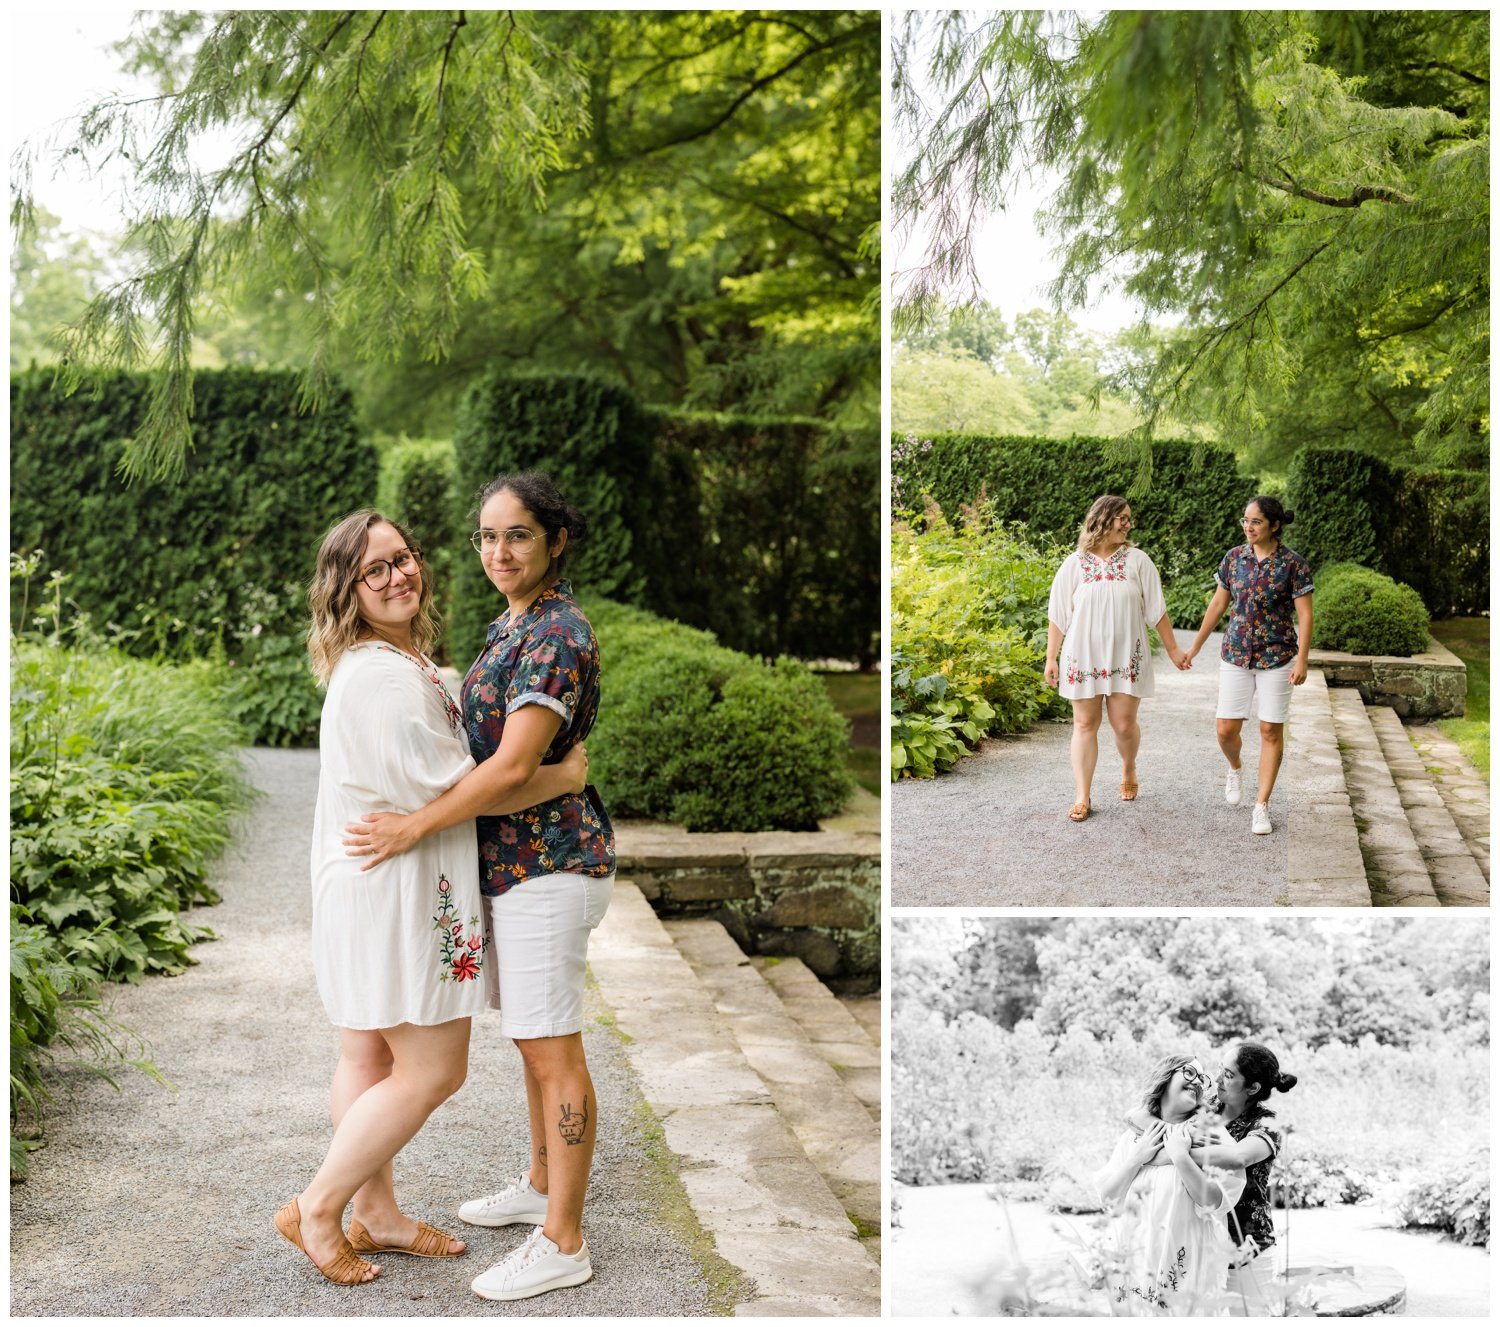 Lesbian-engagement-session-at-Longwood-Gardens-near-Philadelphia-PA-2.jpg